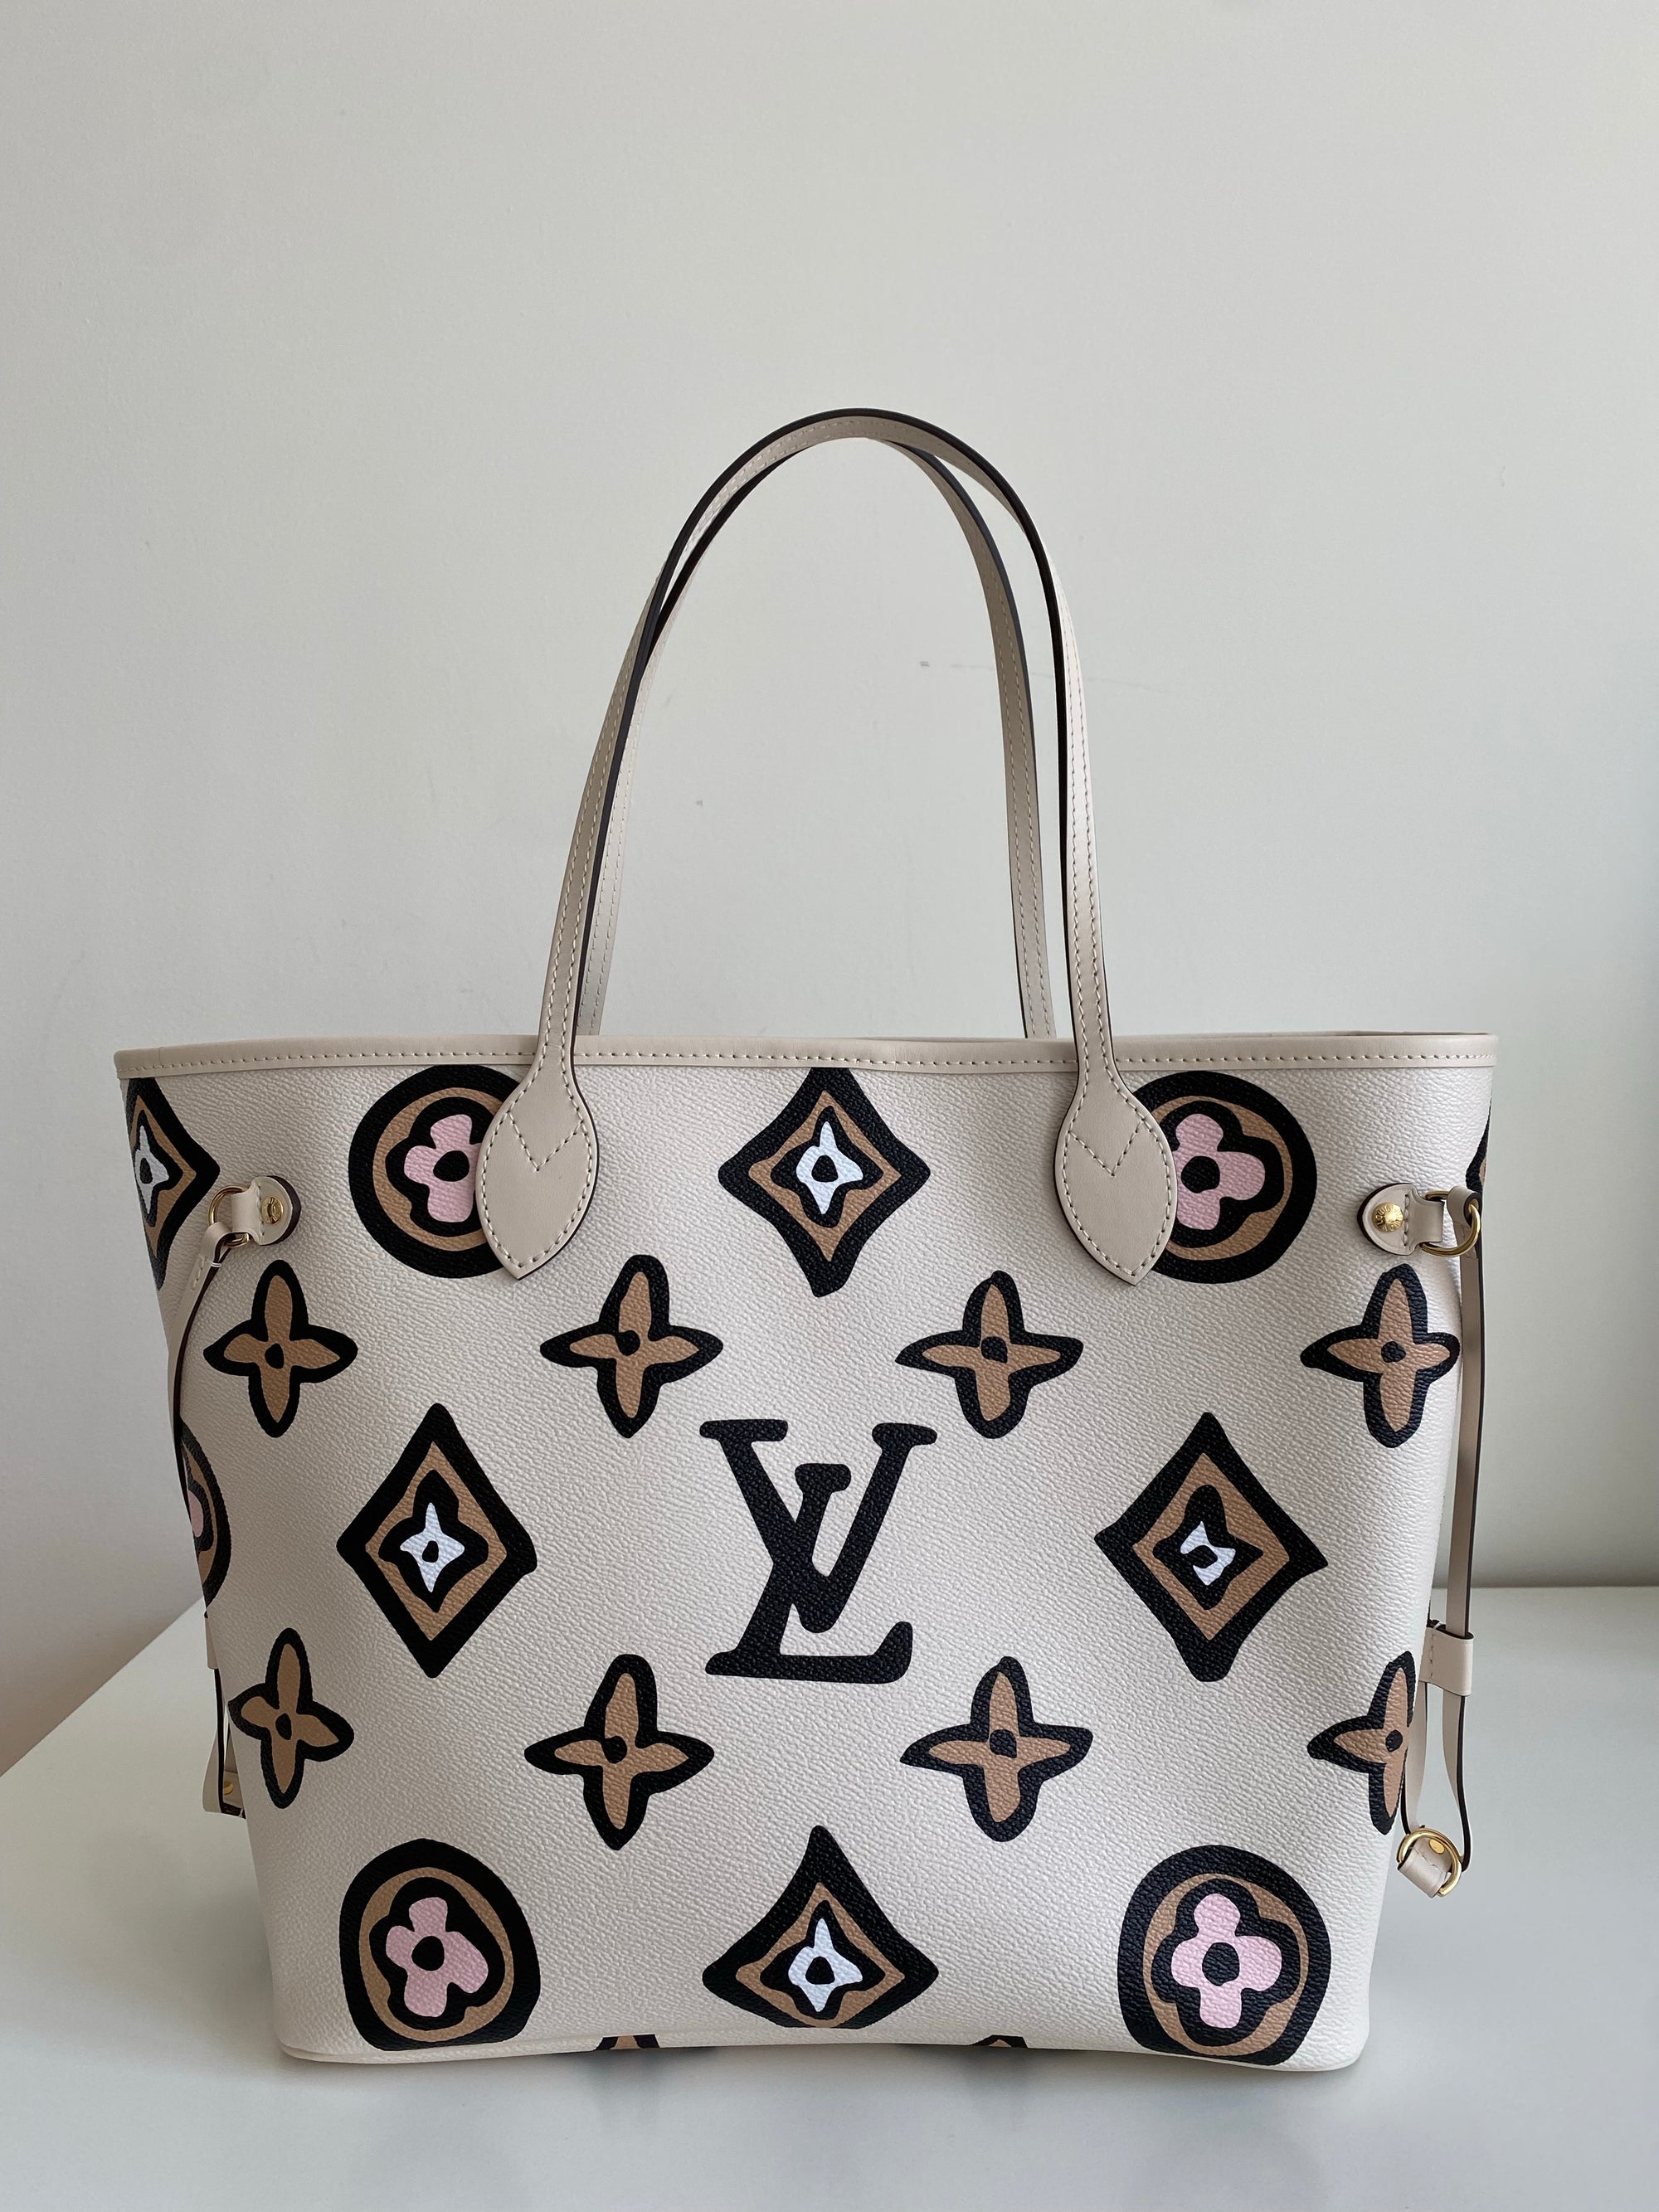 Cream Brown Leather Louis Vuitton Neverfull Mm Monogram Canvas Handbags